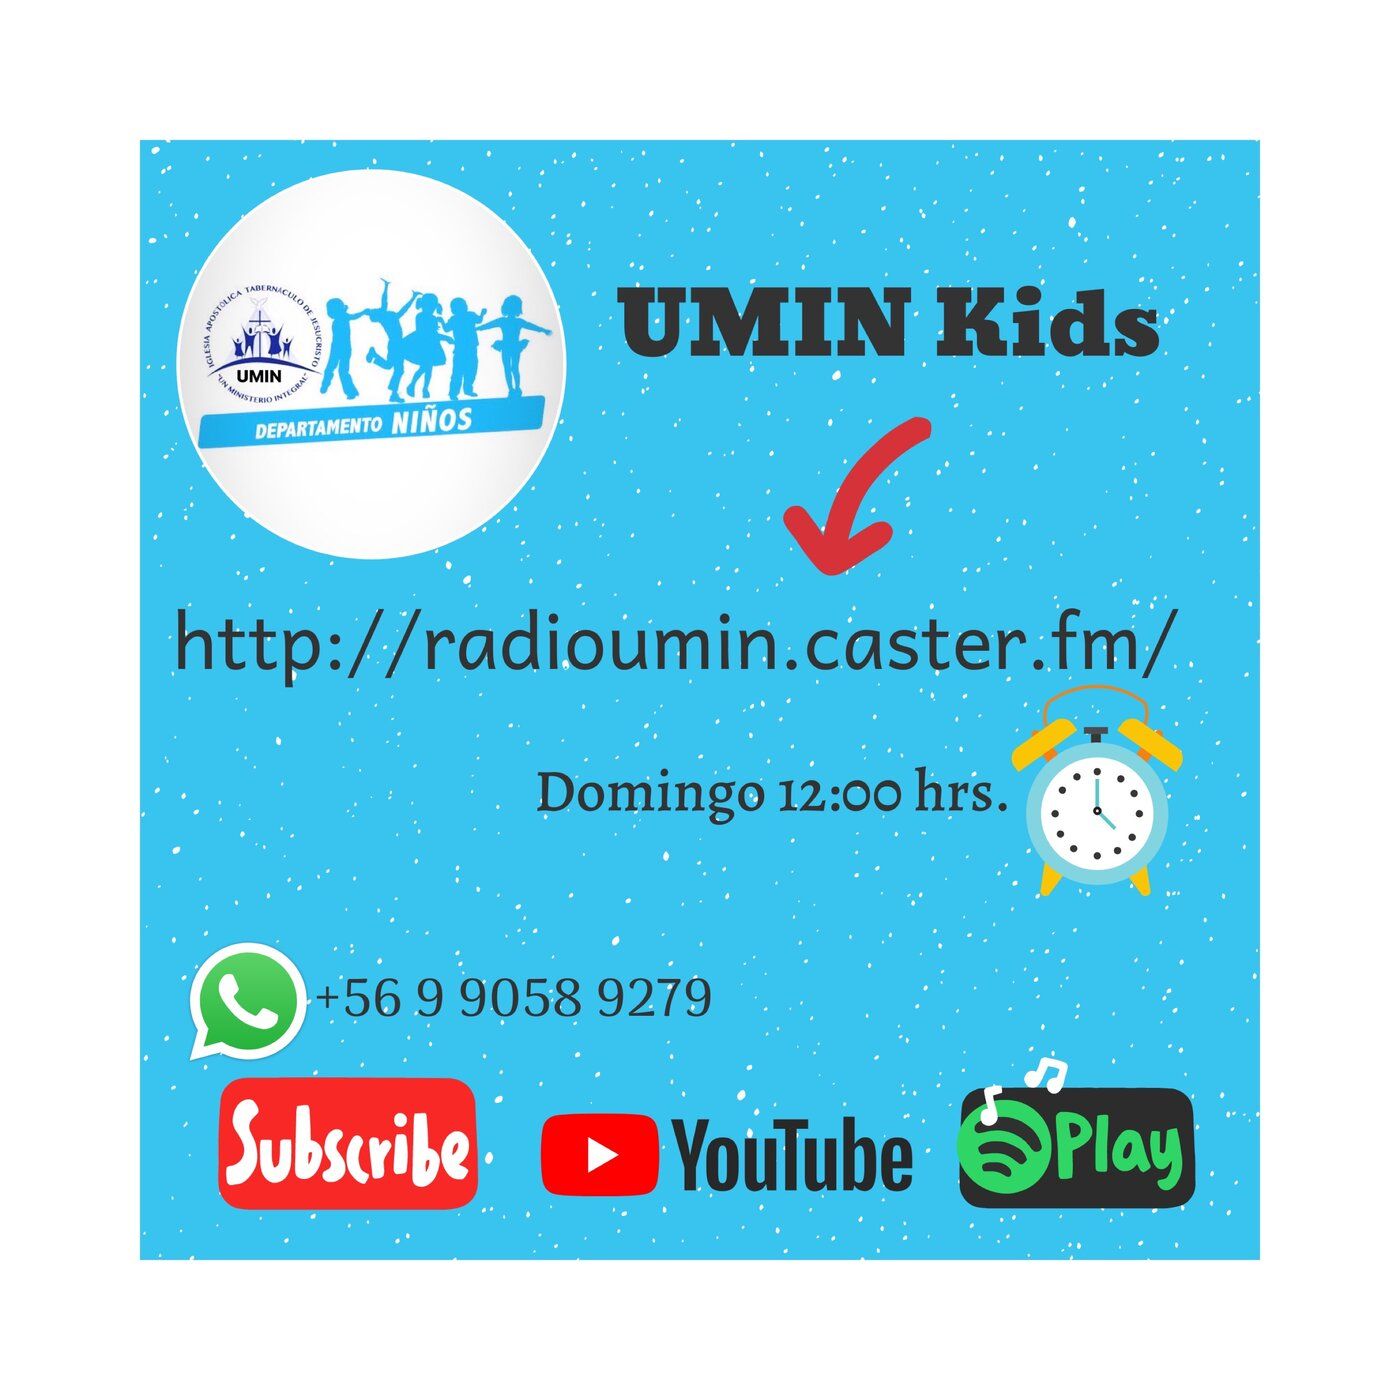 UMIN Kids 31-05-20 (online-audio-converter.com)